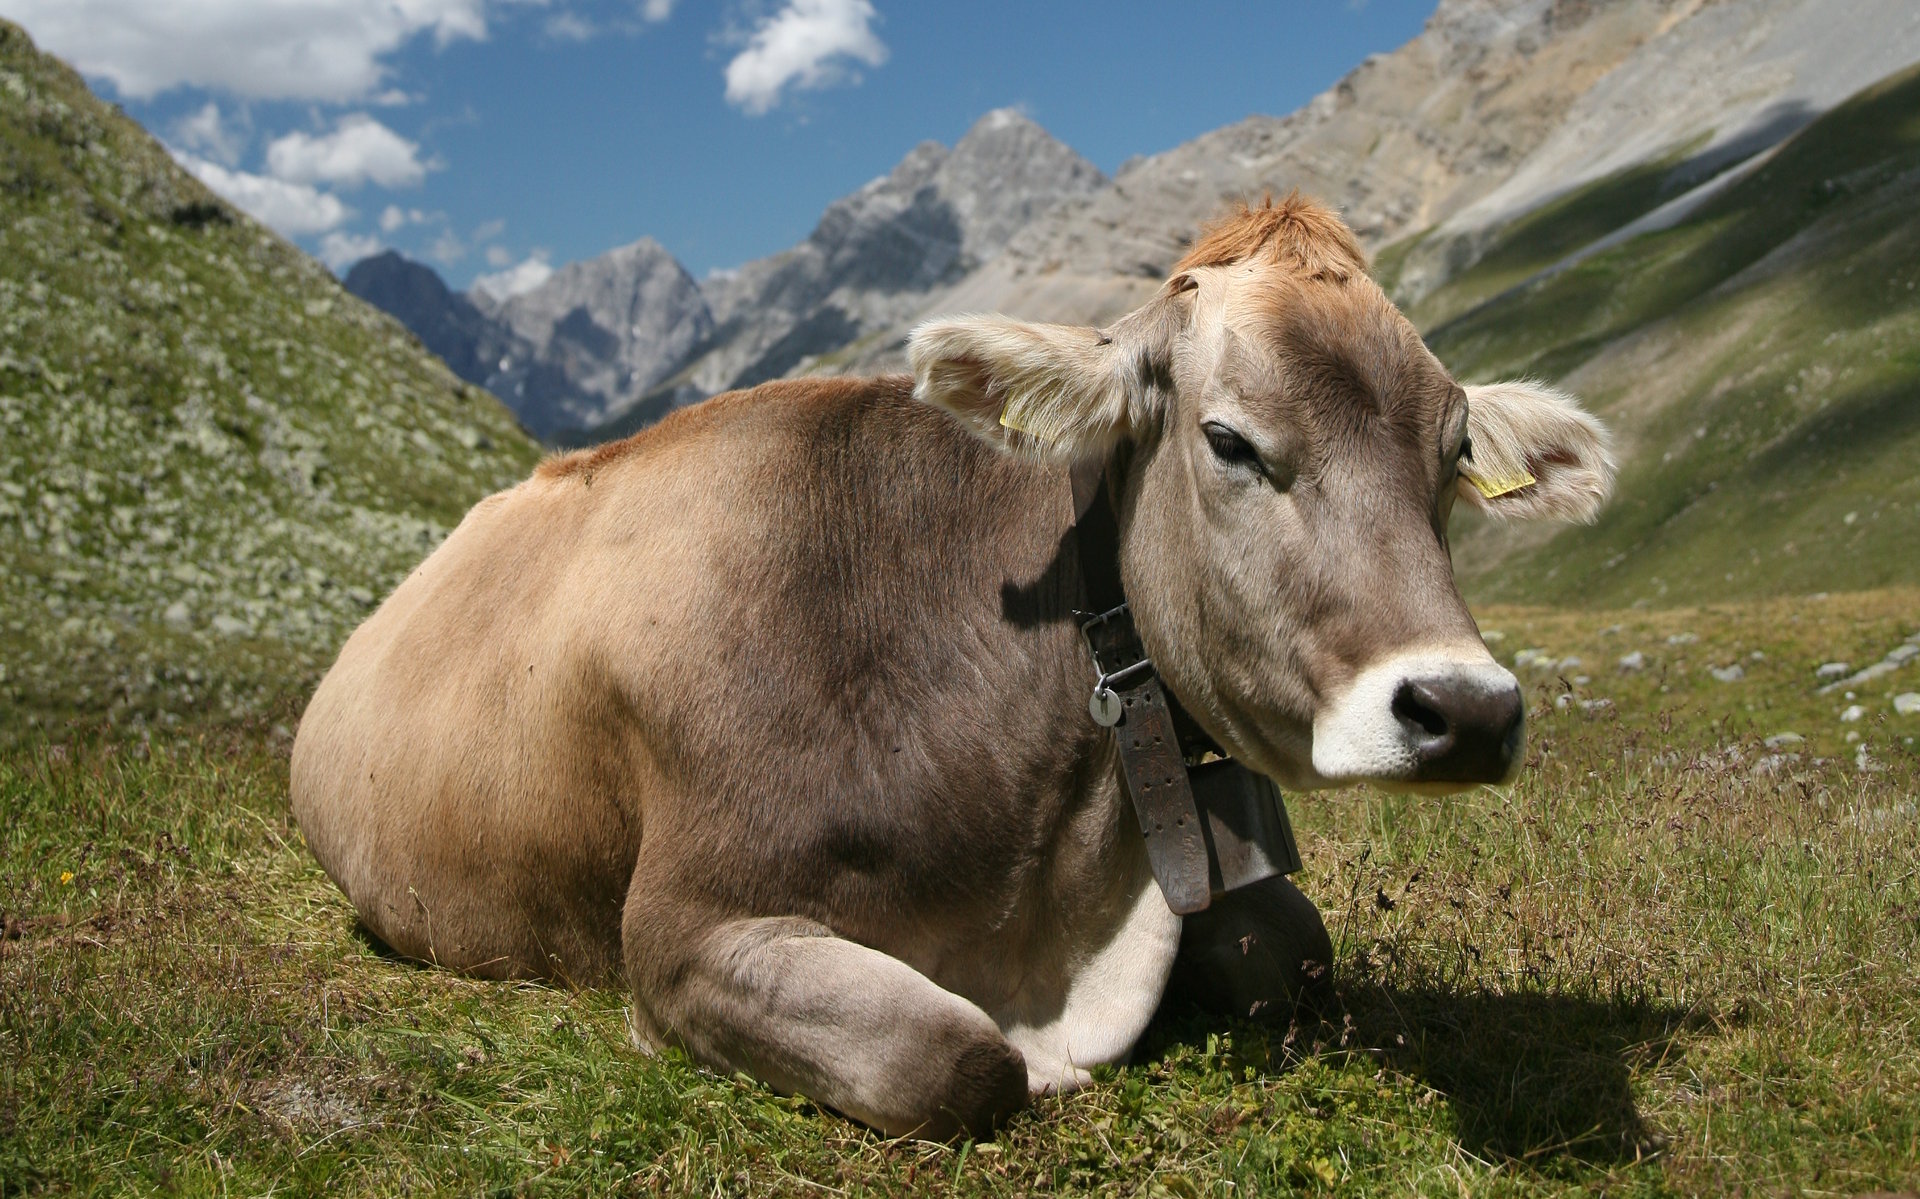 Cow grazing in grassy field.